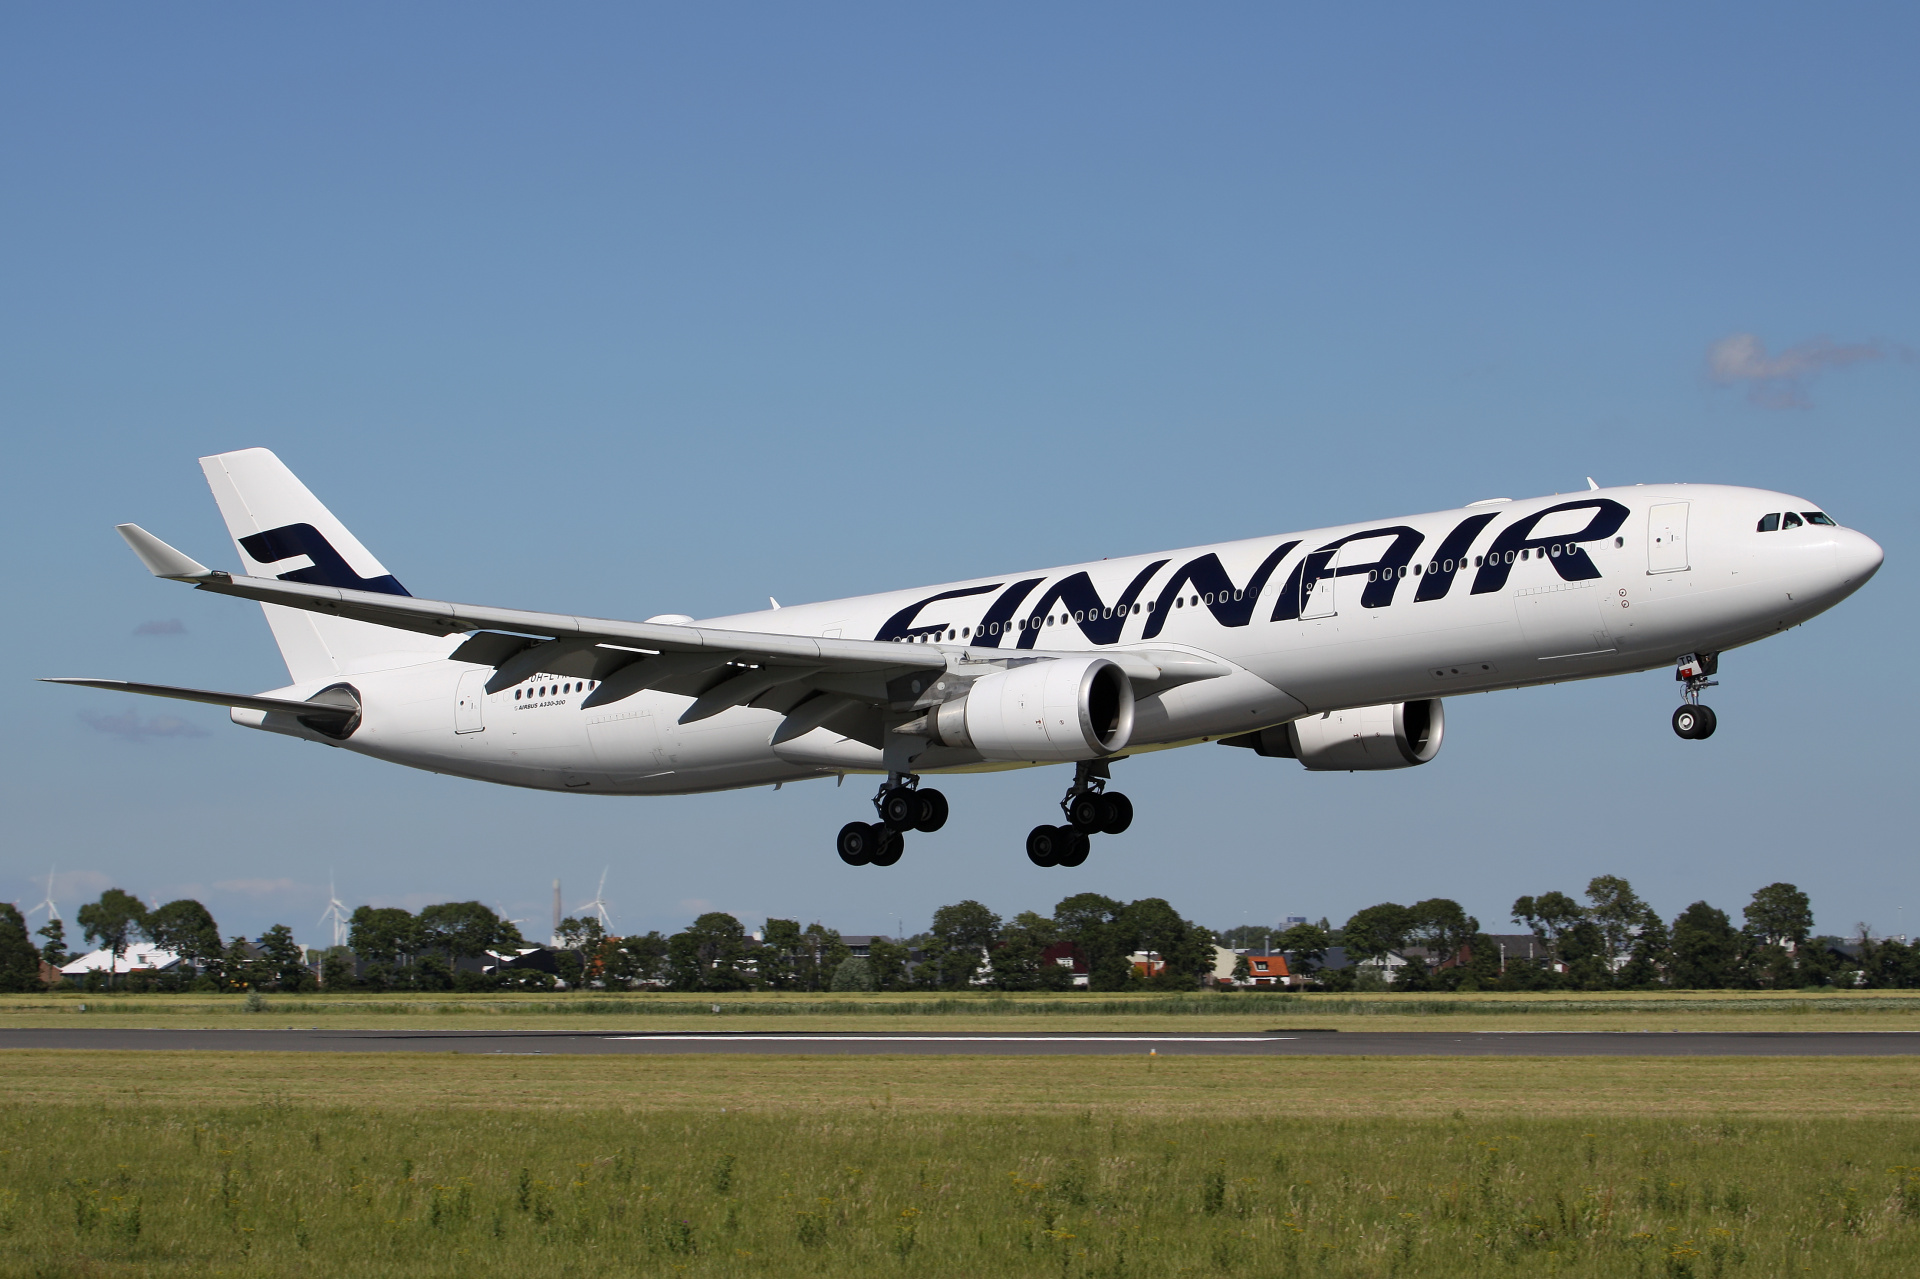 OH-LTR, Finnair (Aircraft » Schiphol Spotting » Airbus A330-300)